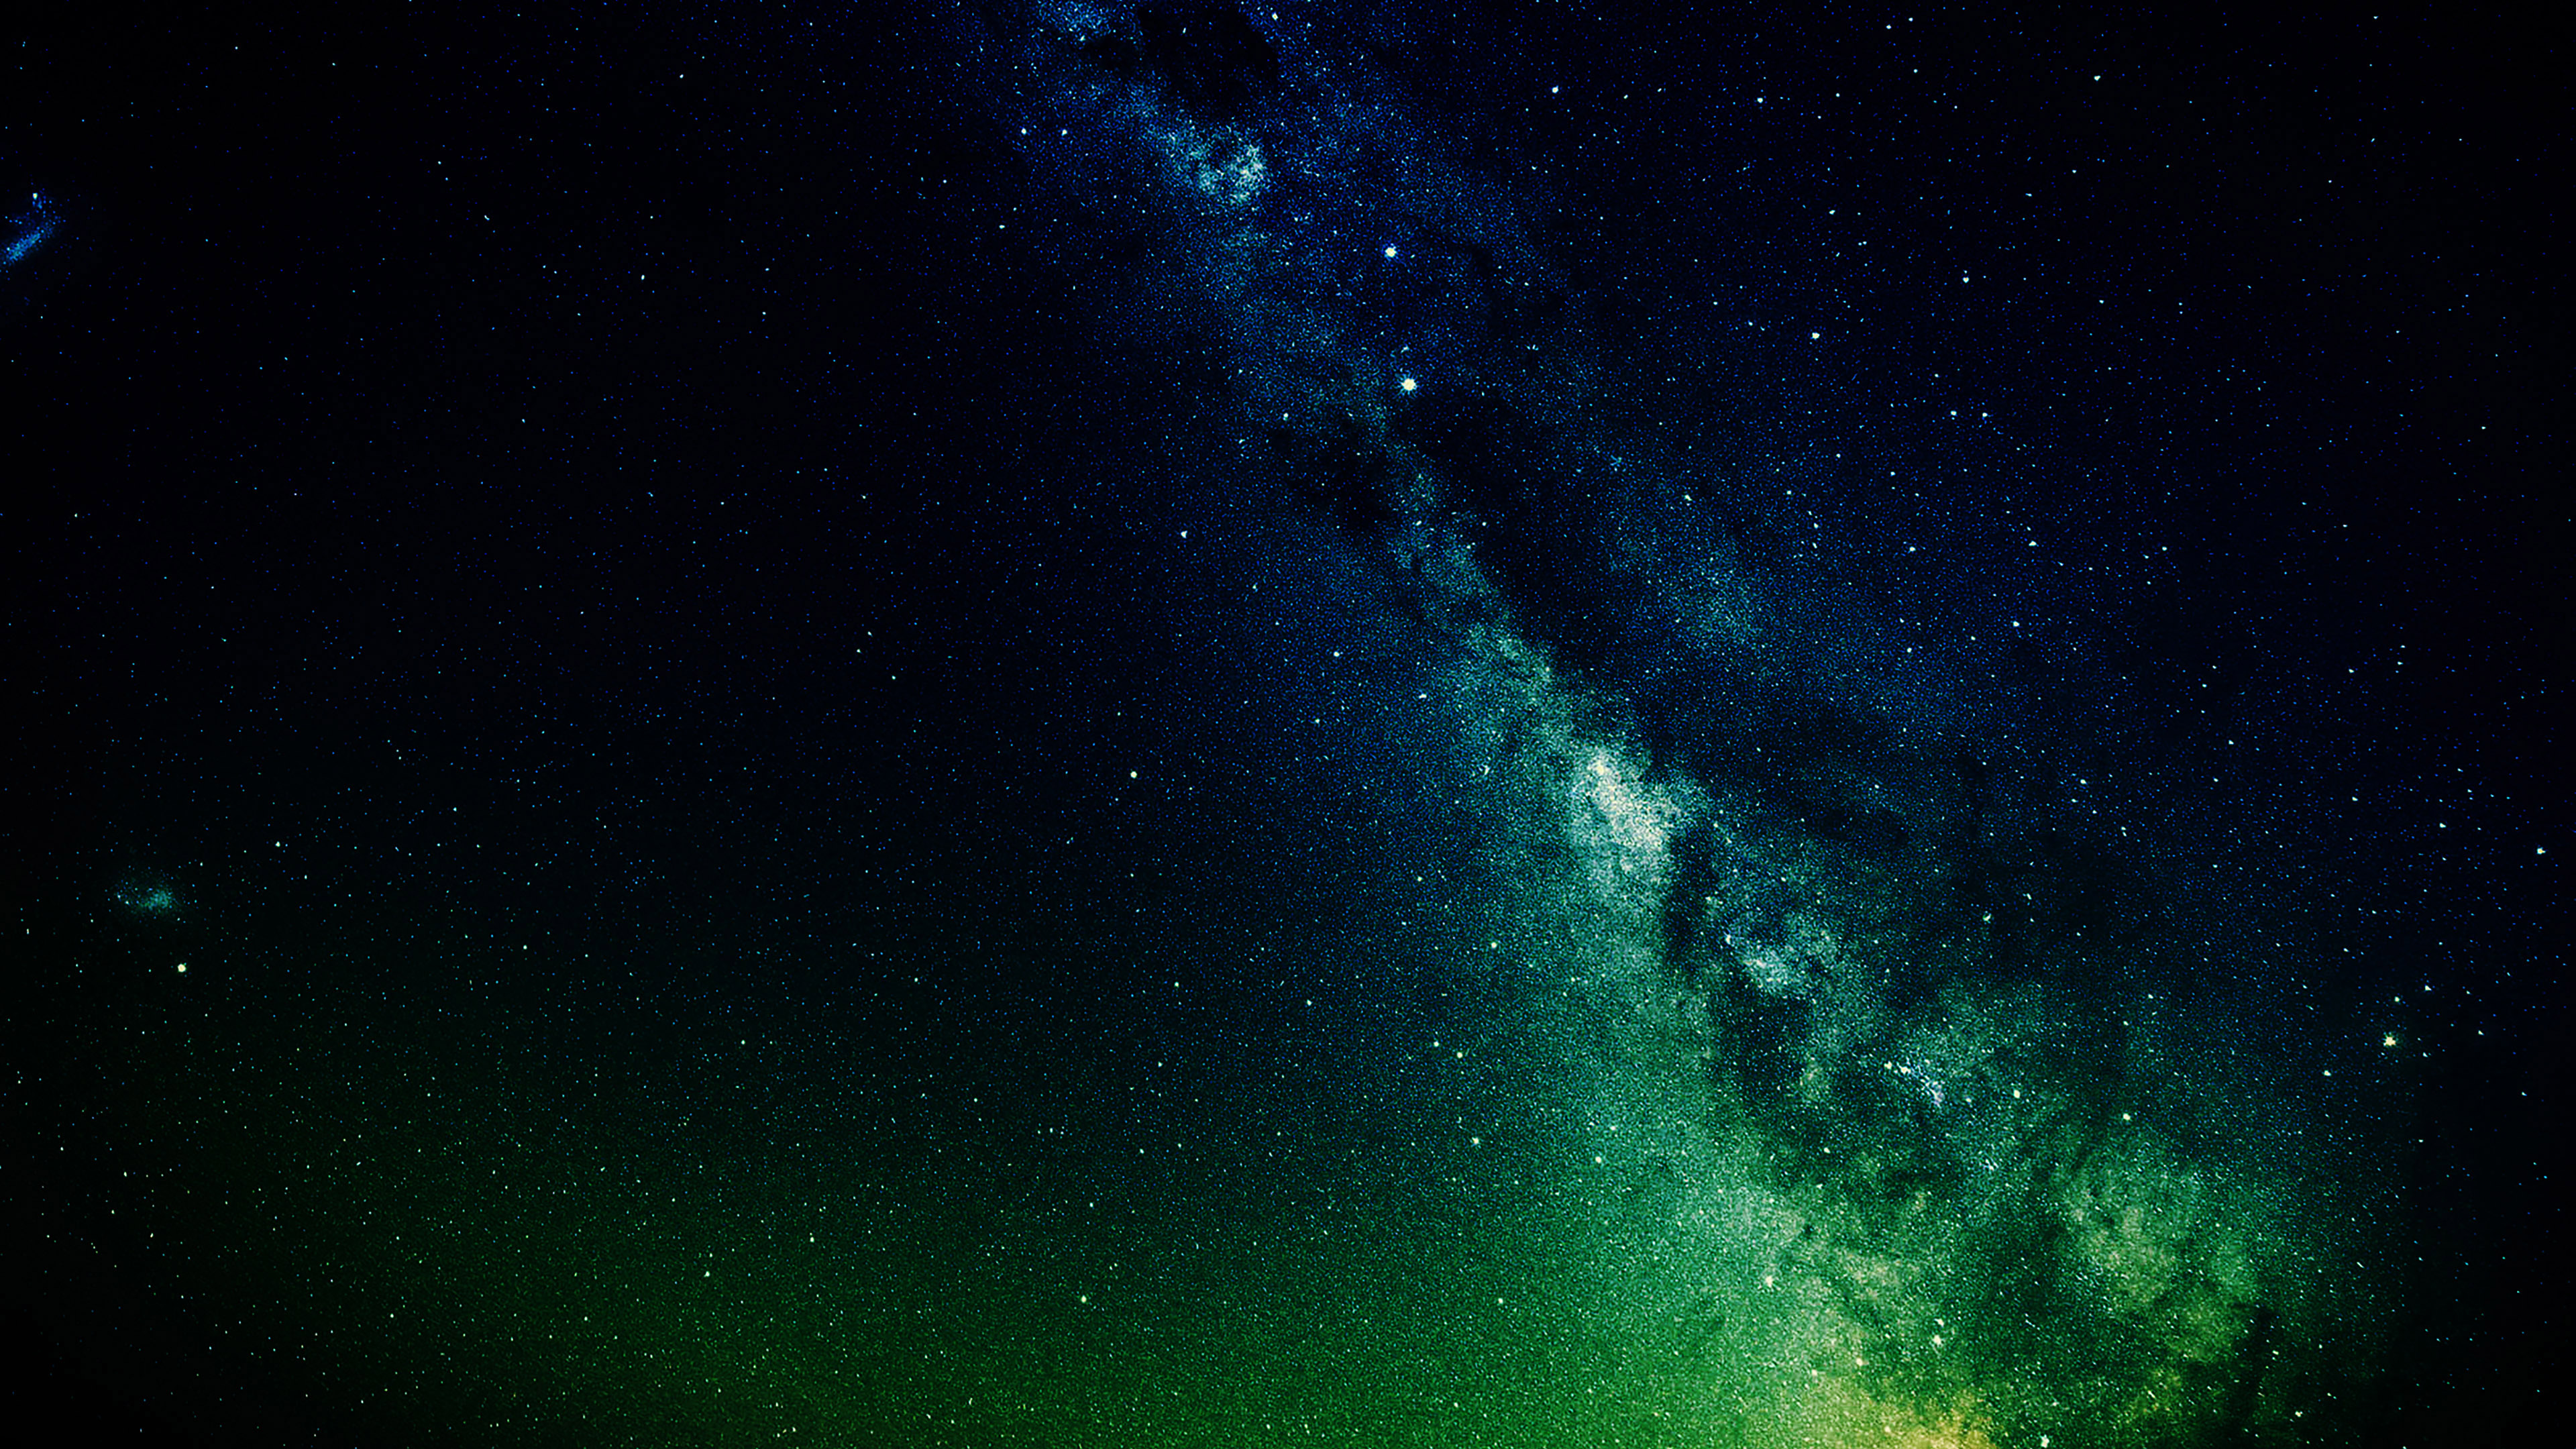 wallpaper for desktop, laptop. summer dark night revisited star space sky